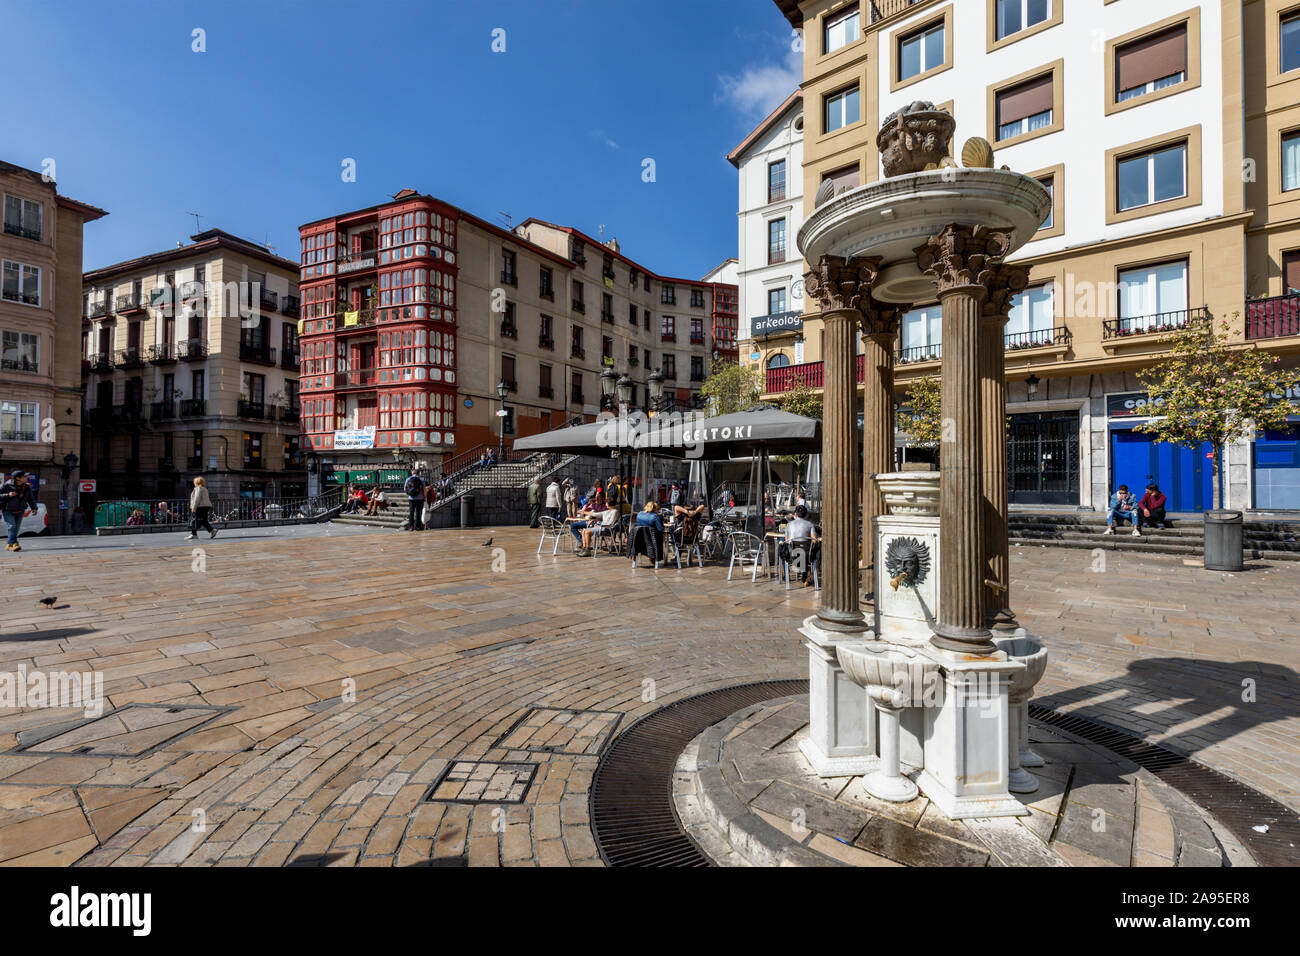 Bilbao antiguo fotografías e imágenes de alta resolución - Alamy